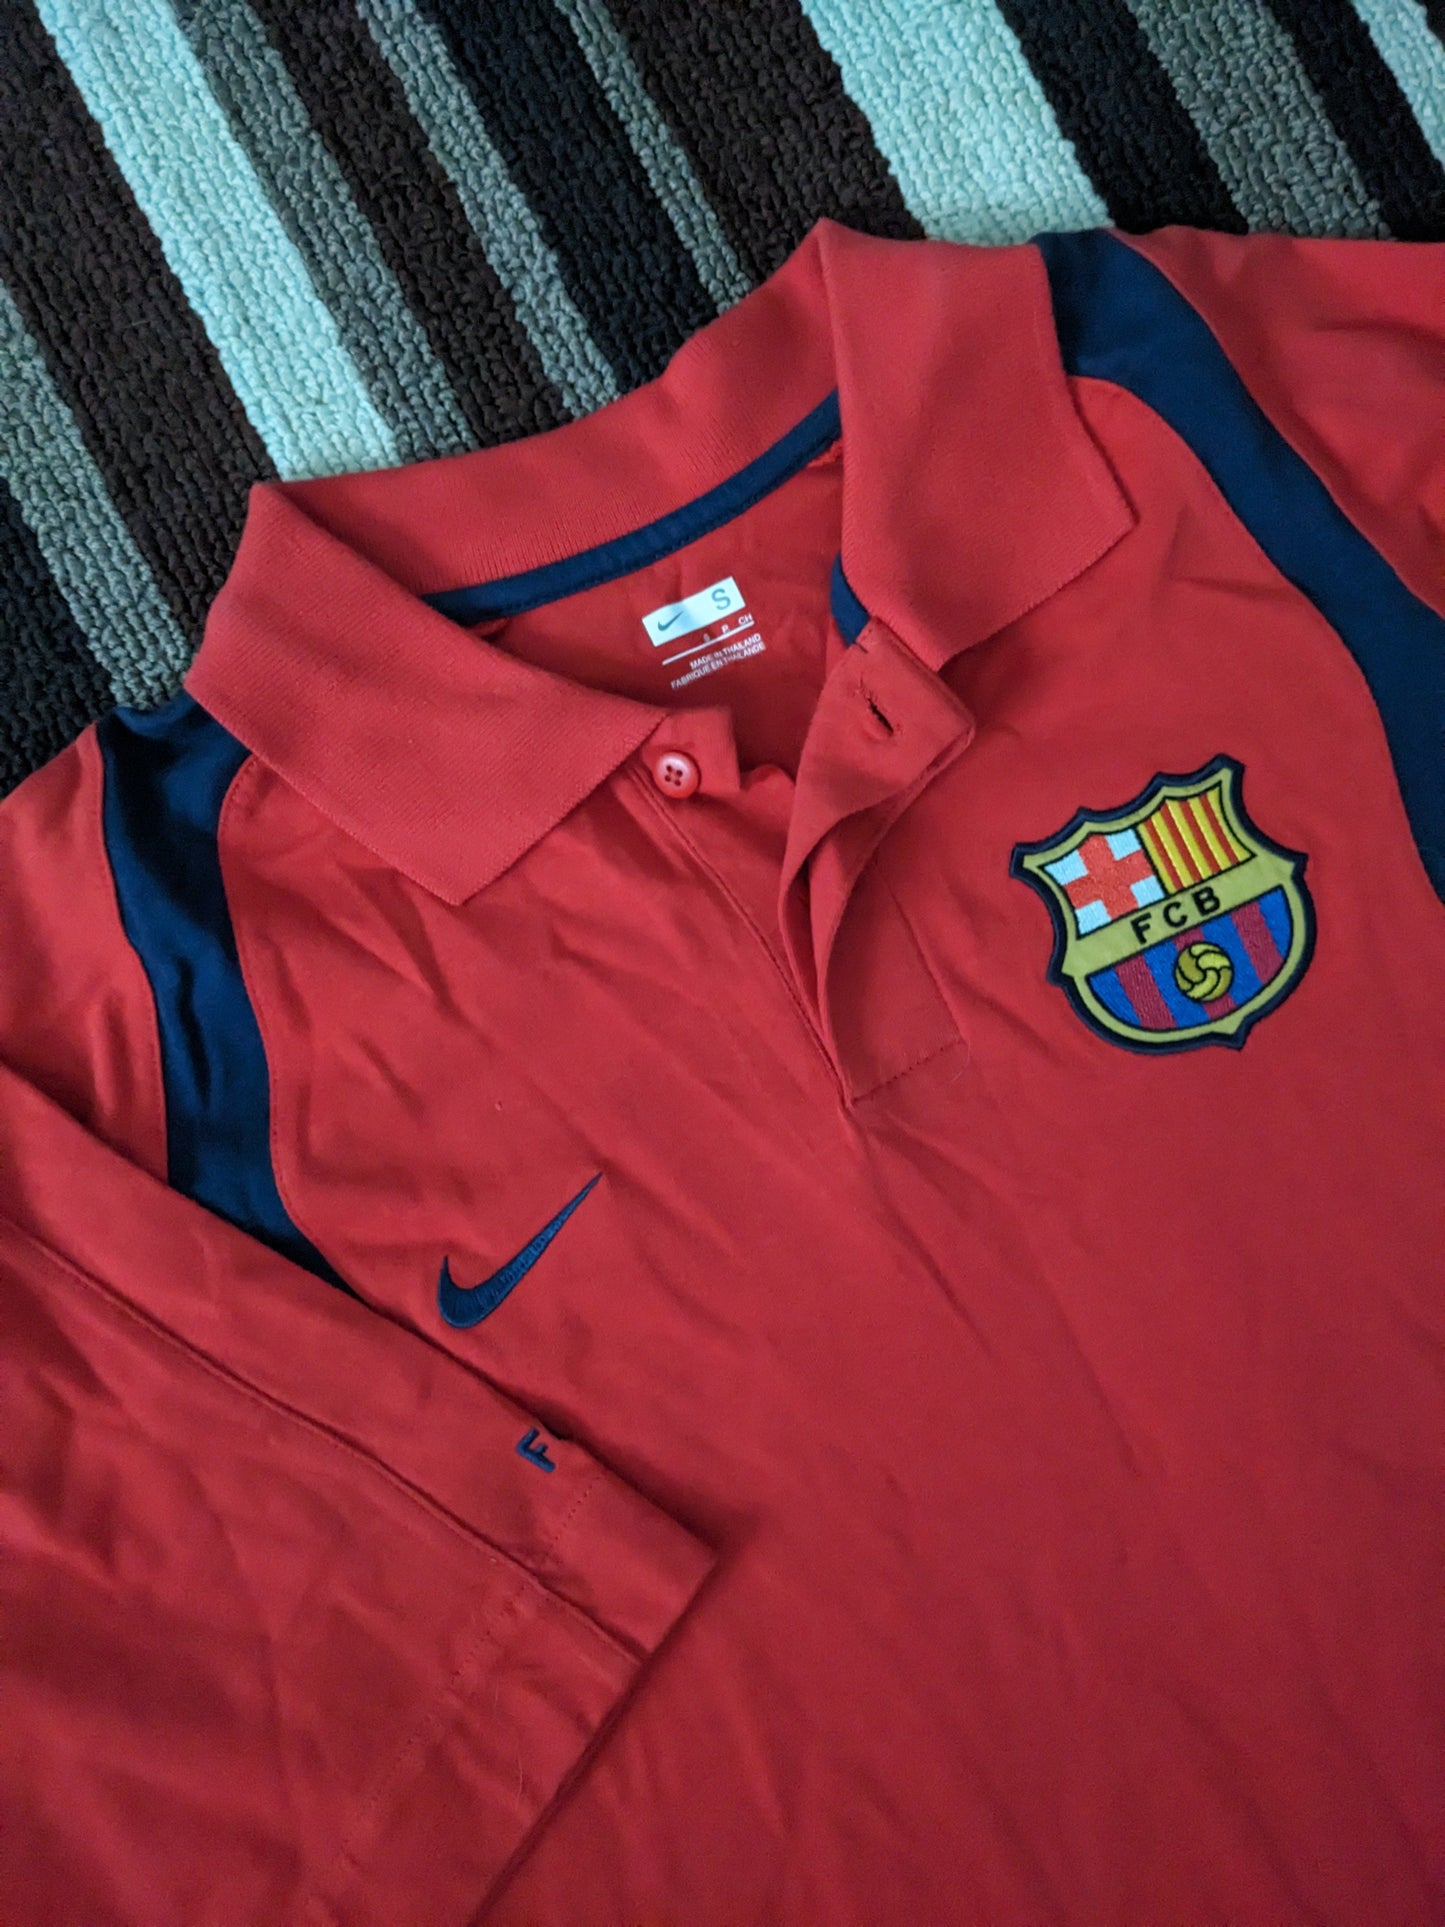 Barcelona polo Shirt (S) *Brand new with tags